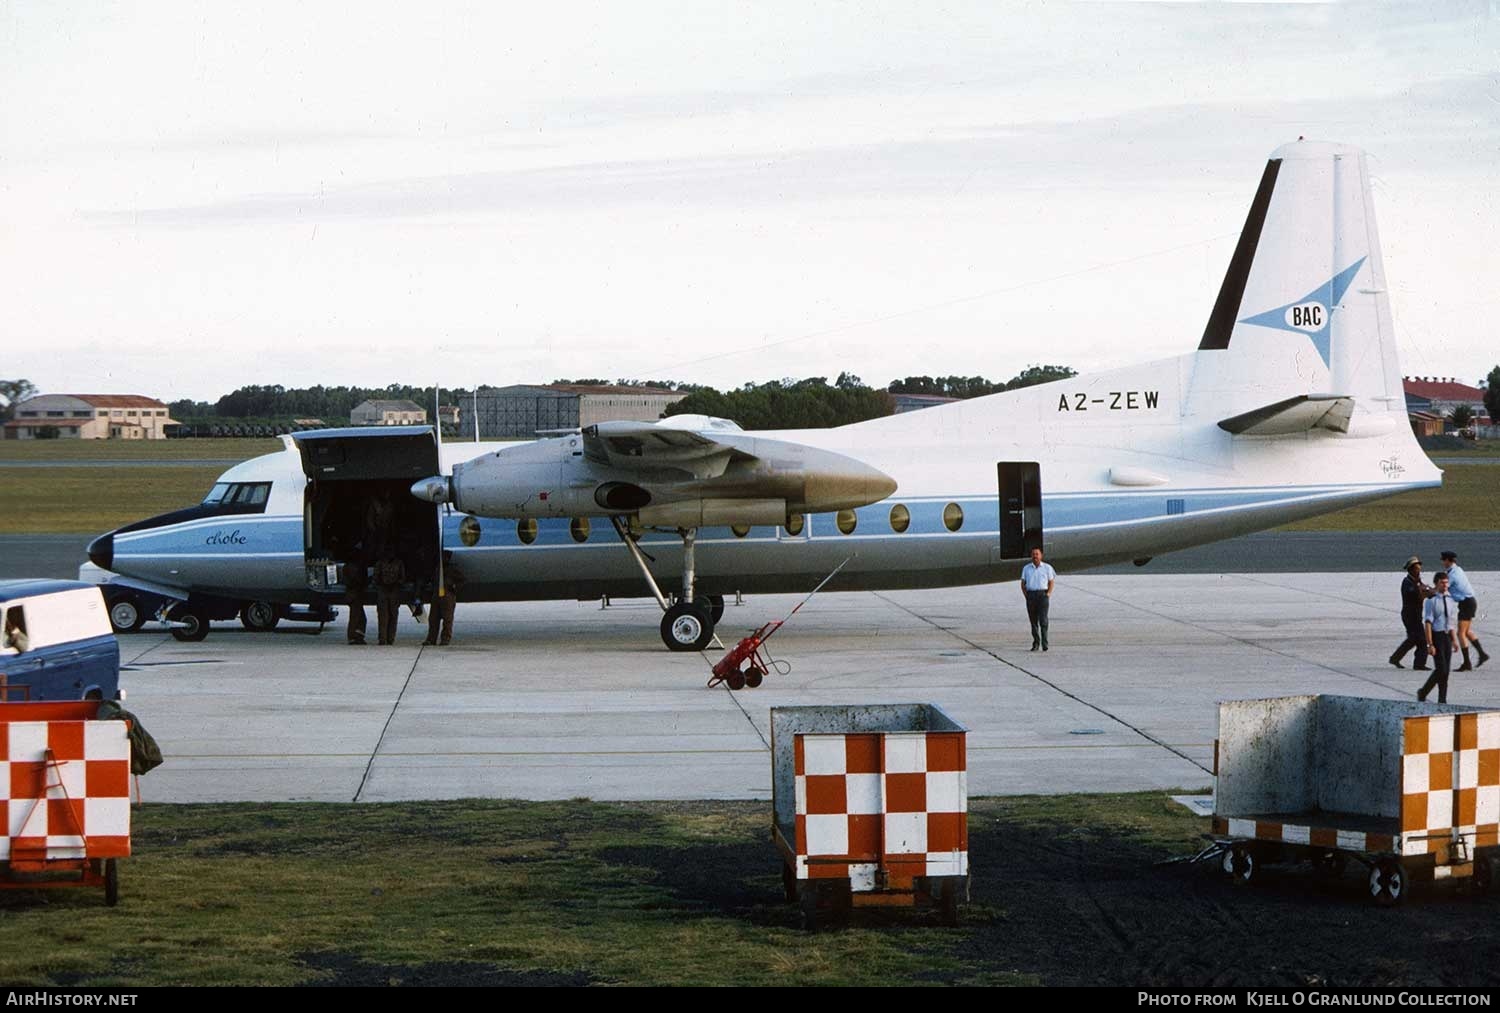 Aircraft Photo Of A2 Zew Fokker F27 600 Friendship Bac Botswana Airways Corporation